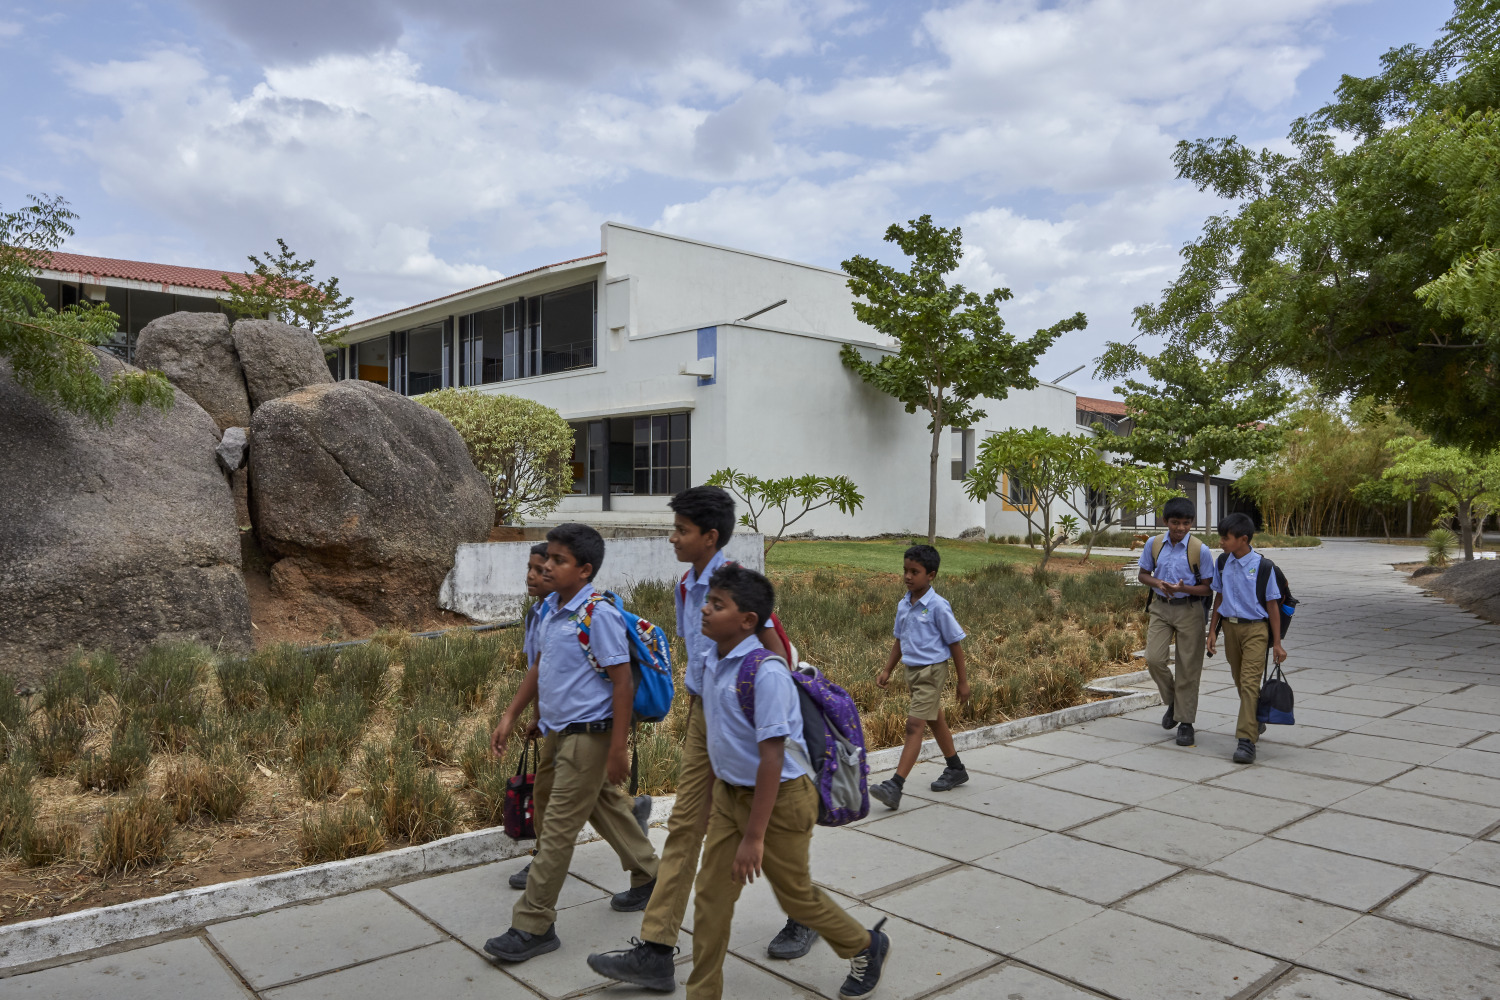 Sparkrill International School, Warangal, Telangana, by SJK Architects. Photograph credits Rajesh Vora